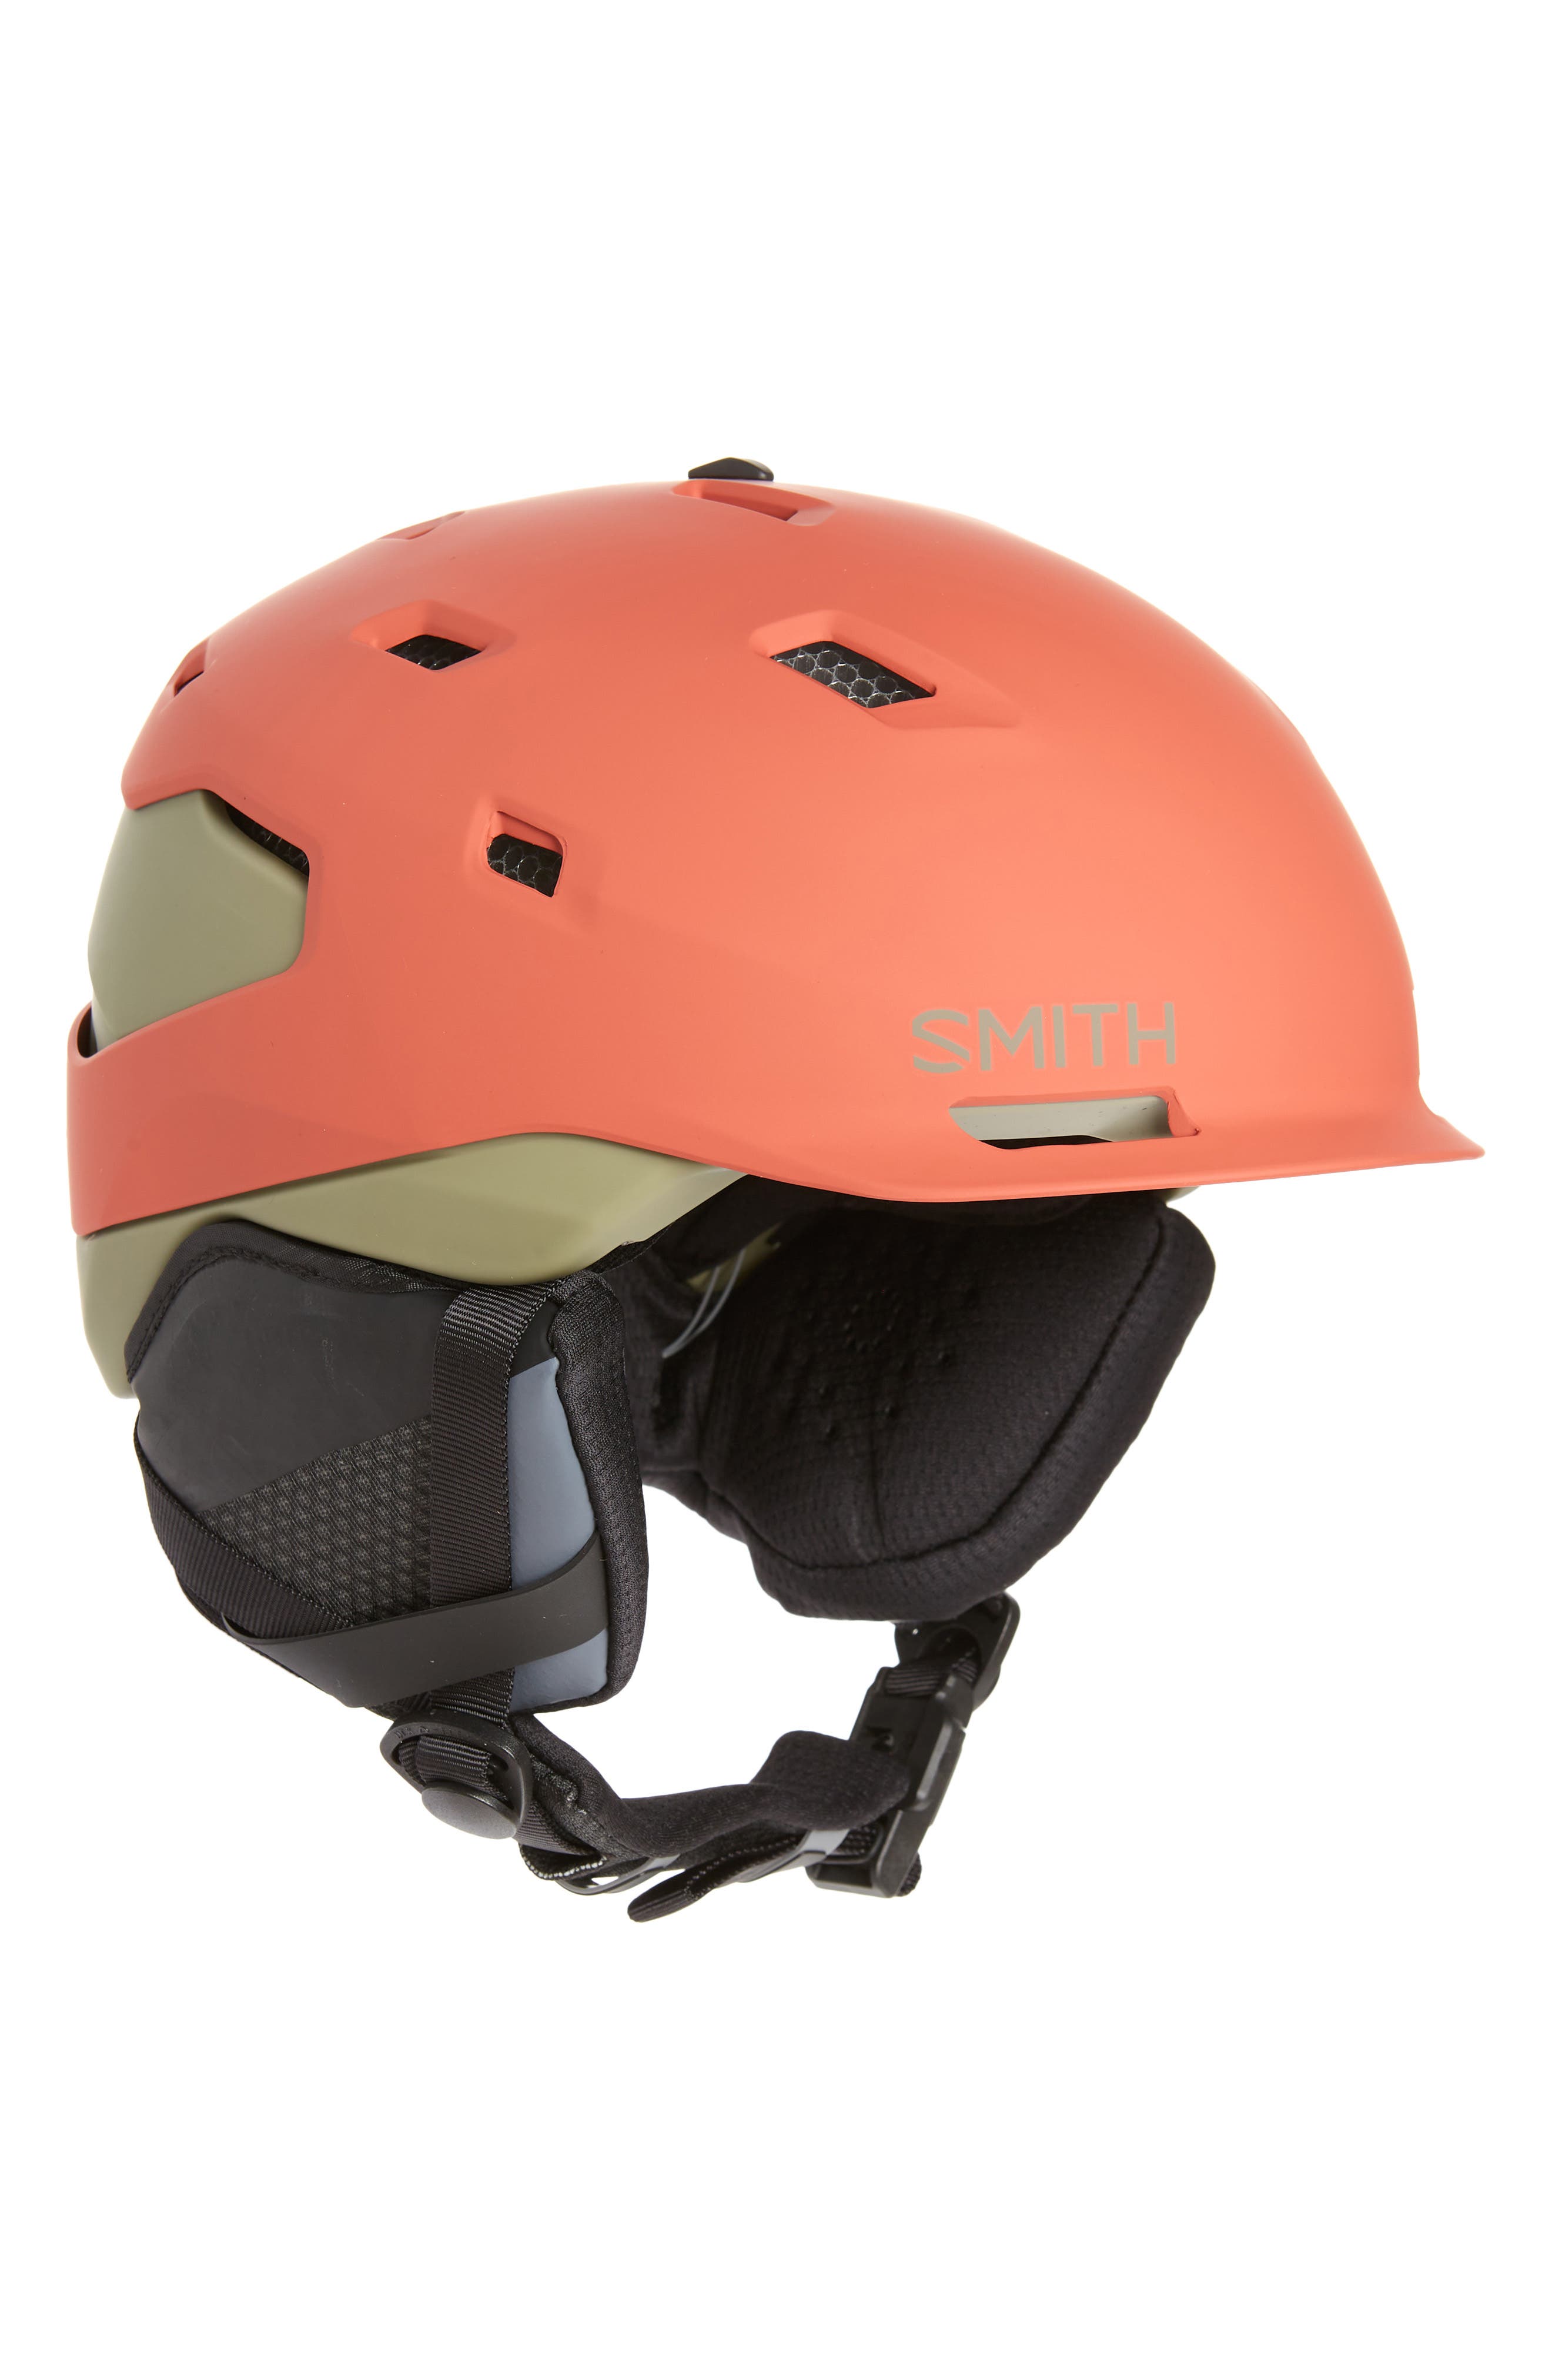 NEW Smith Optics Quantum MIPS Size Small Adult Ski Snowboard Helmet Red 